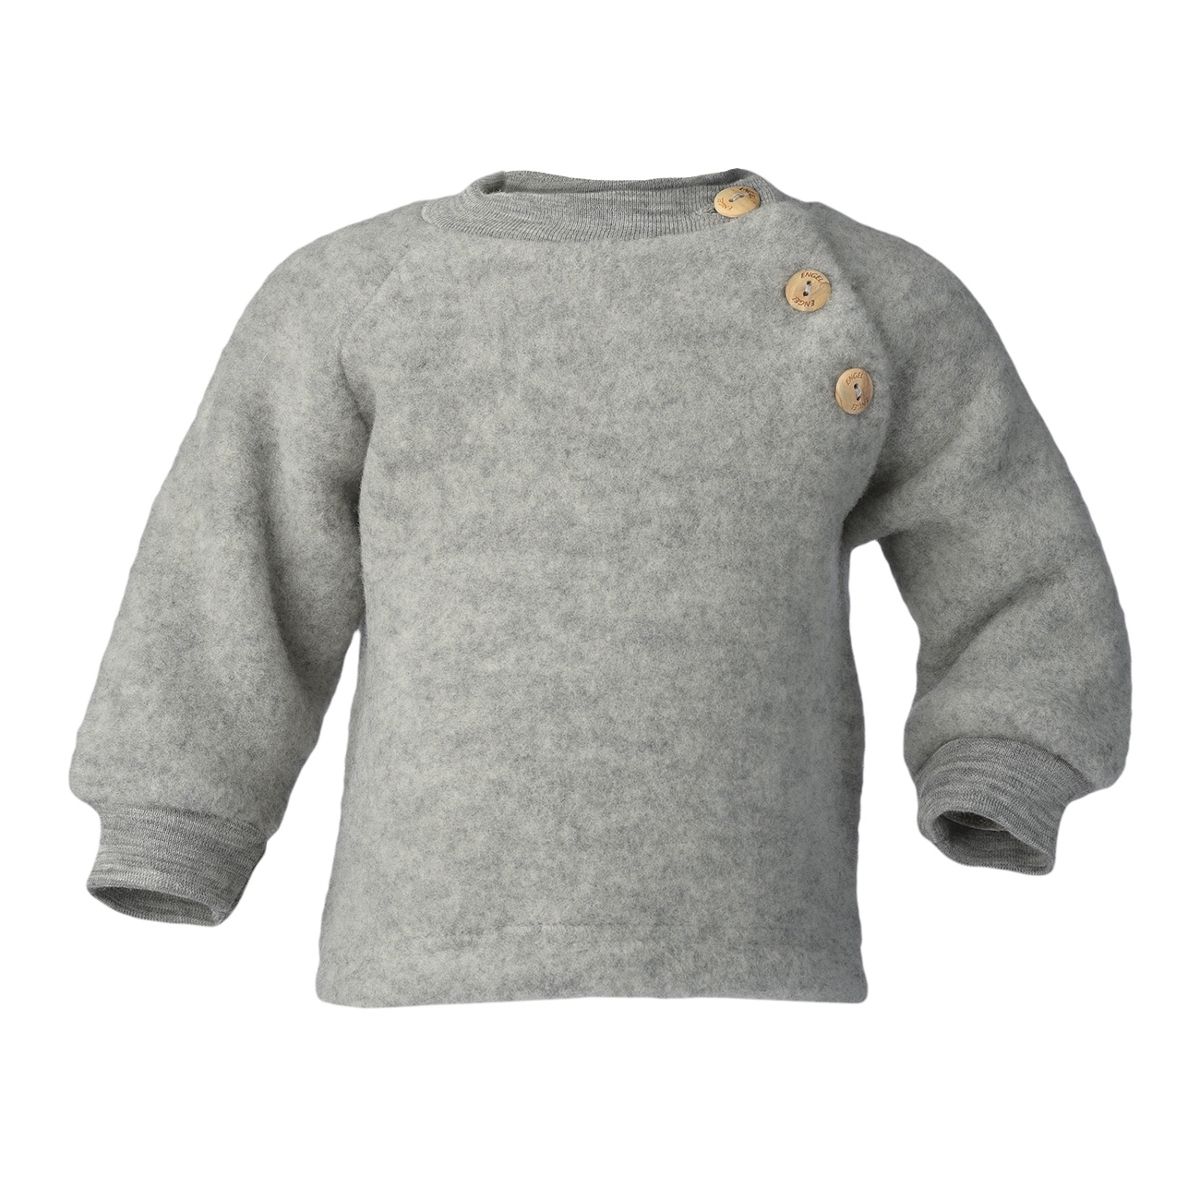 ENGEL Natur Reglan sweater Grey melange 575410-091 